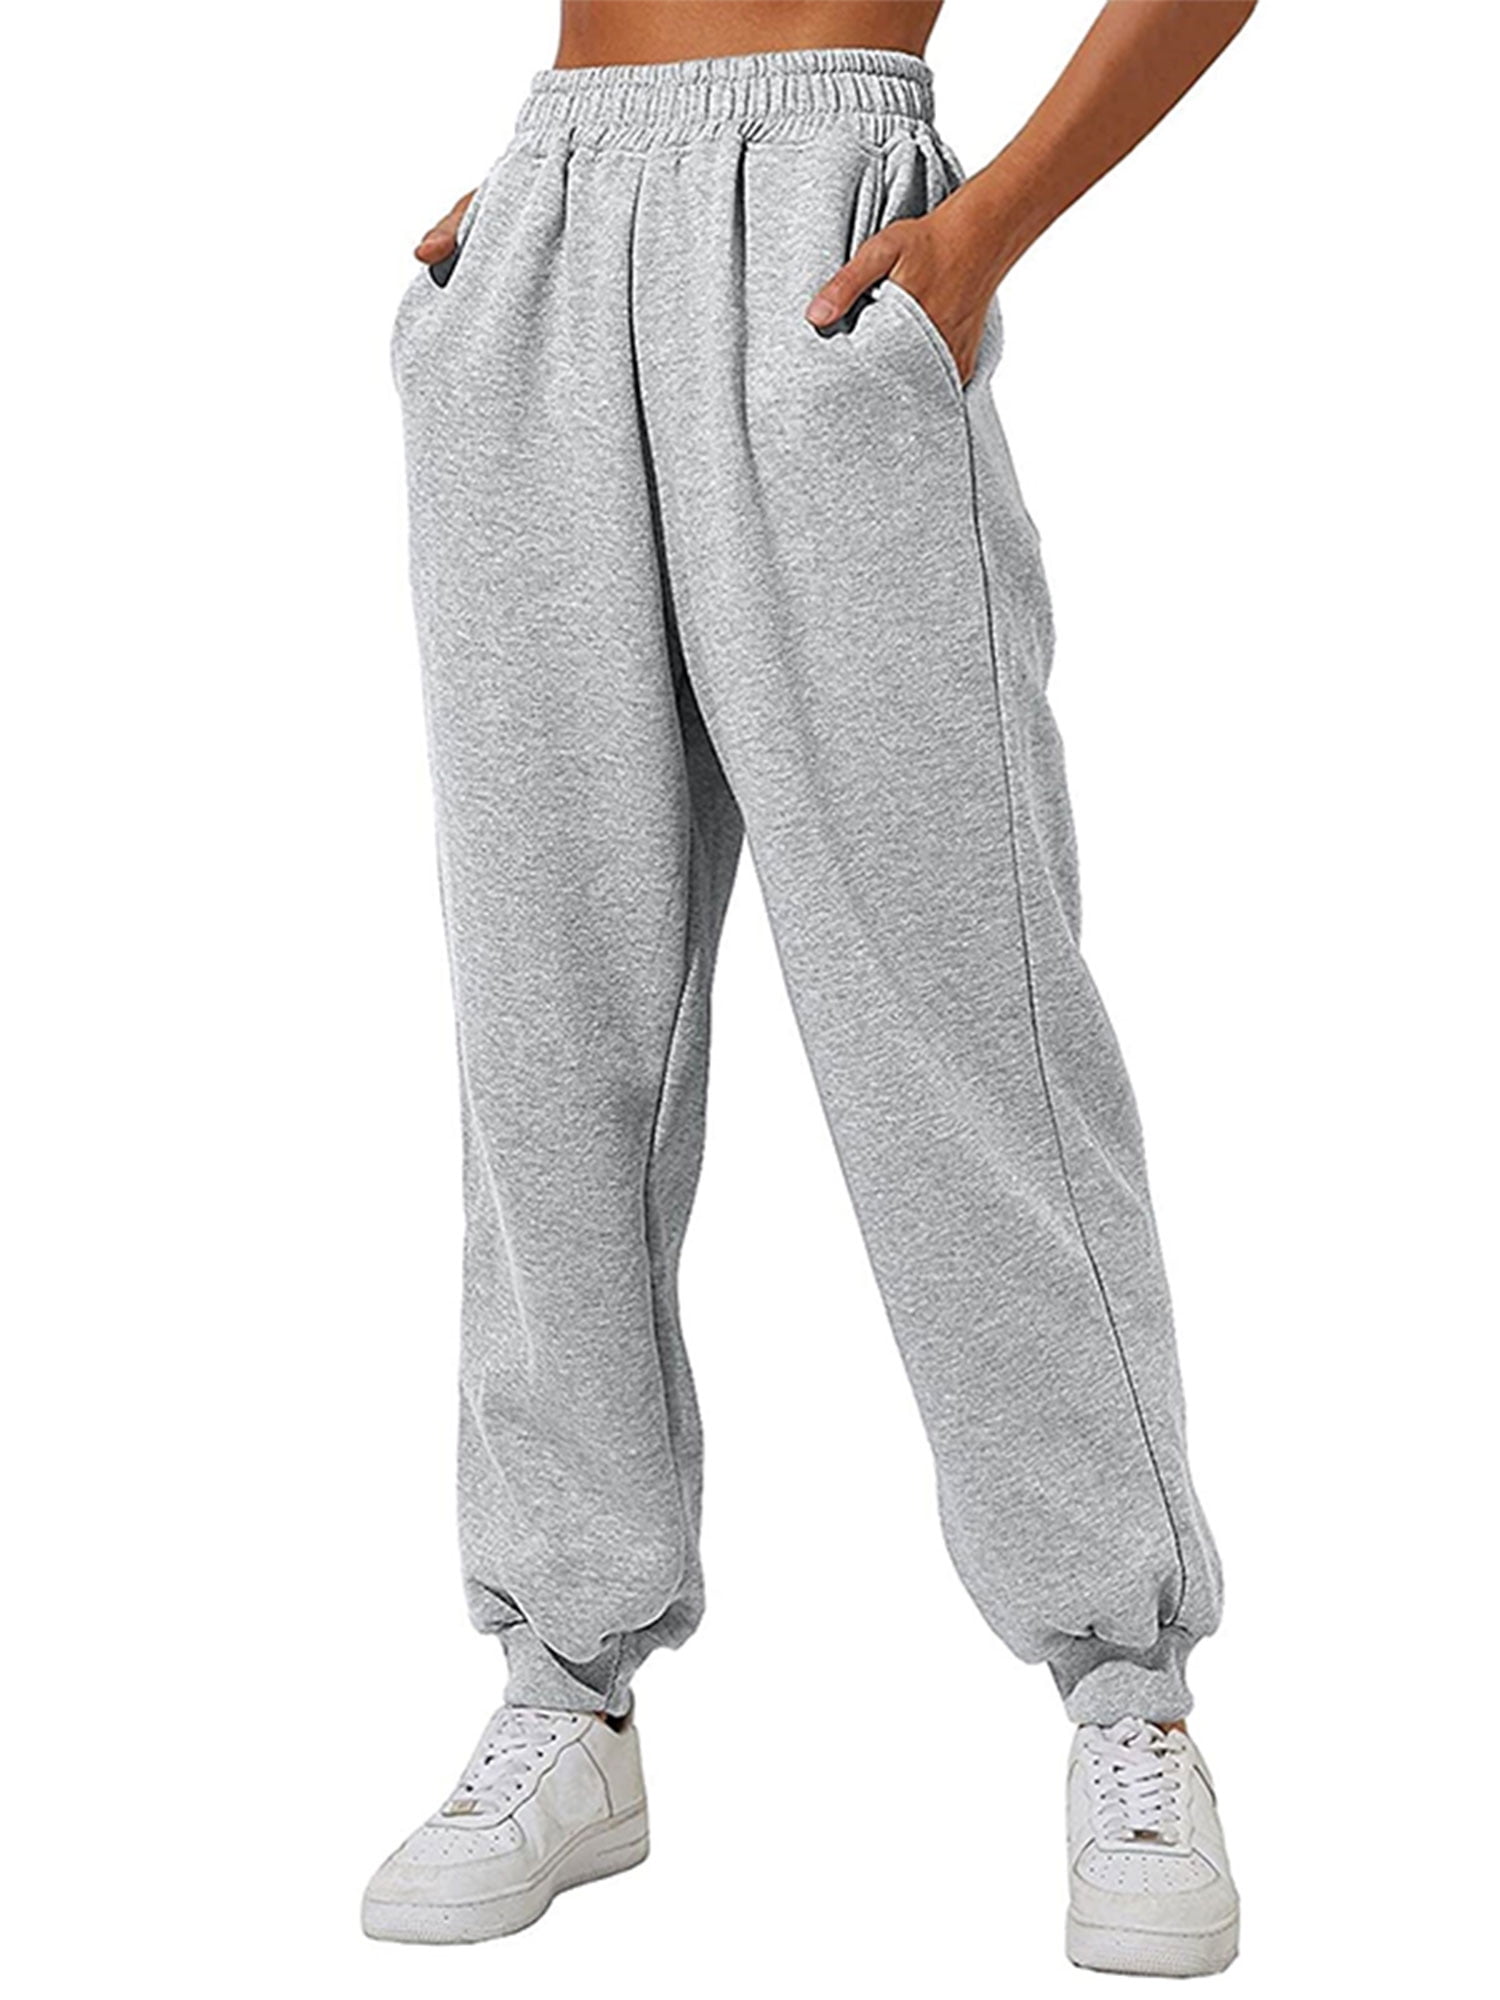 Halloween Sweatpants Joggers Women Comfy Summer Leopard Print Cinch Bottom  Sweatpants Baggy Joggers Pants with Pockets 